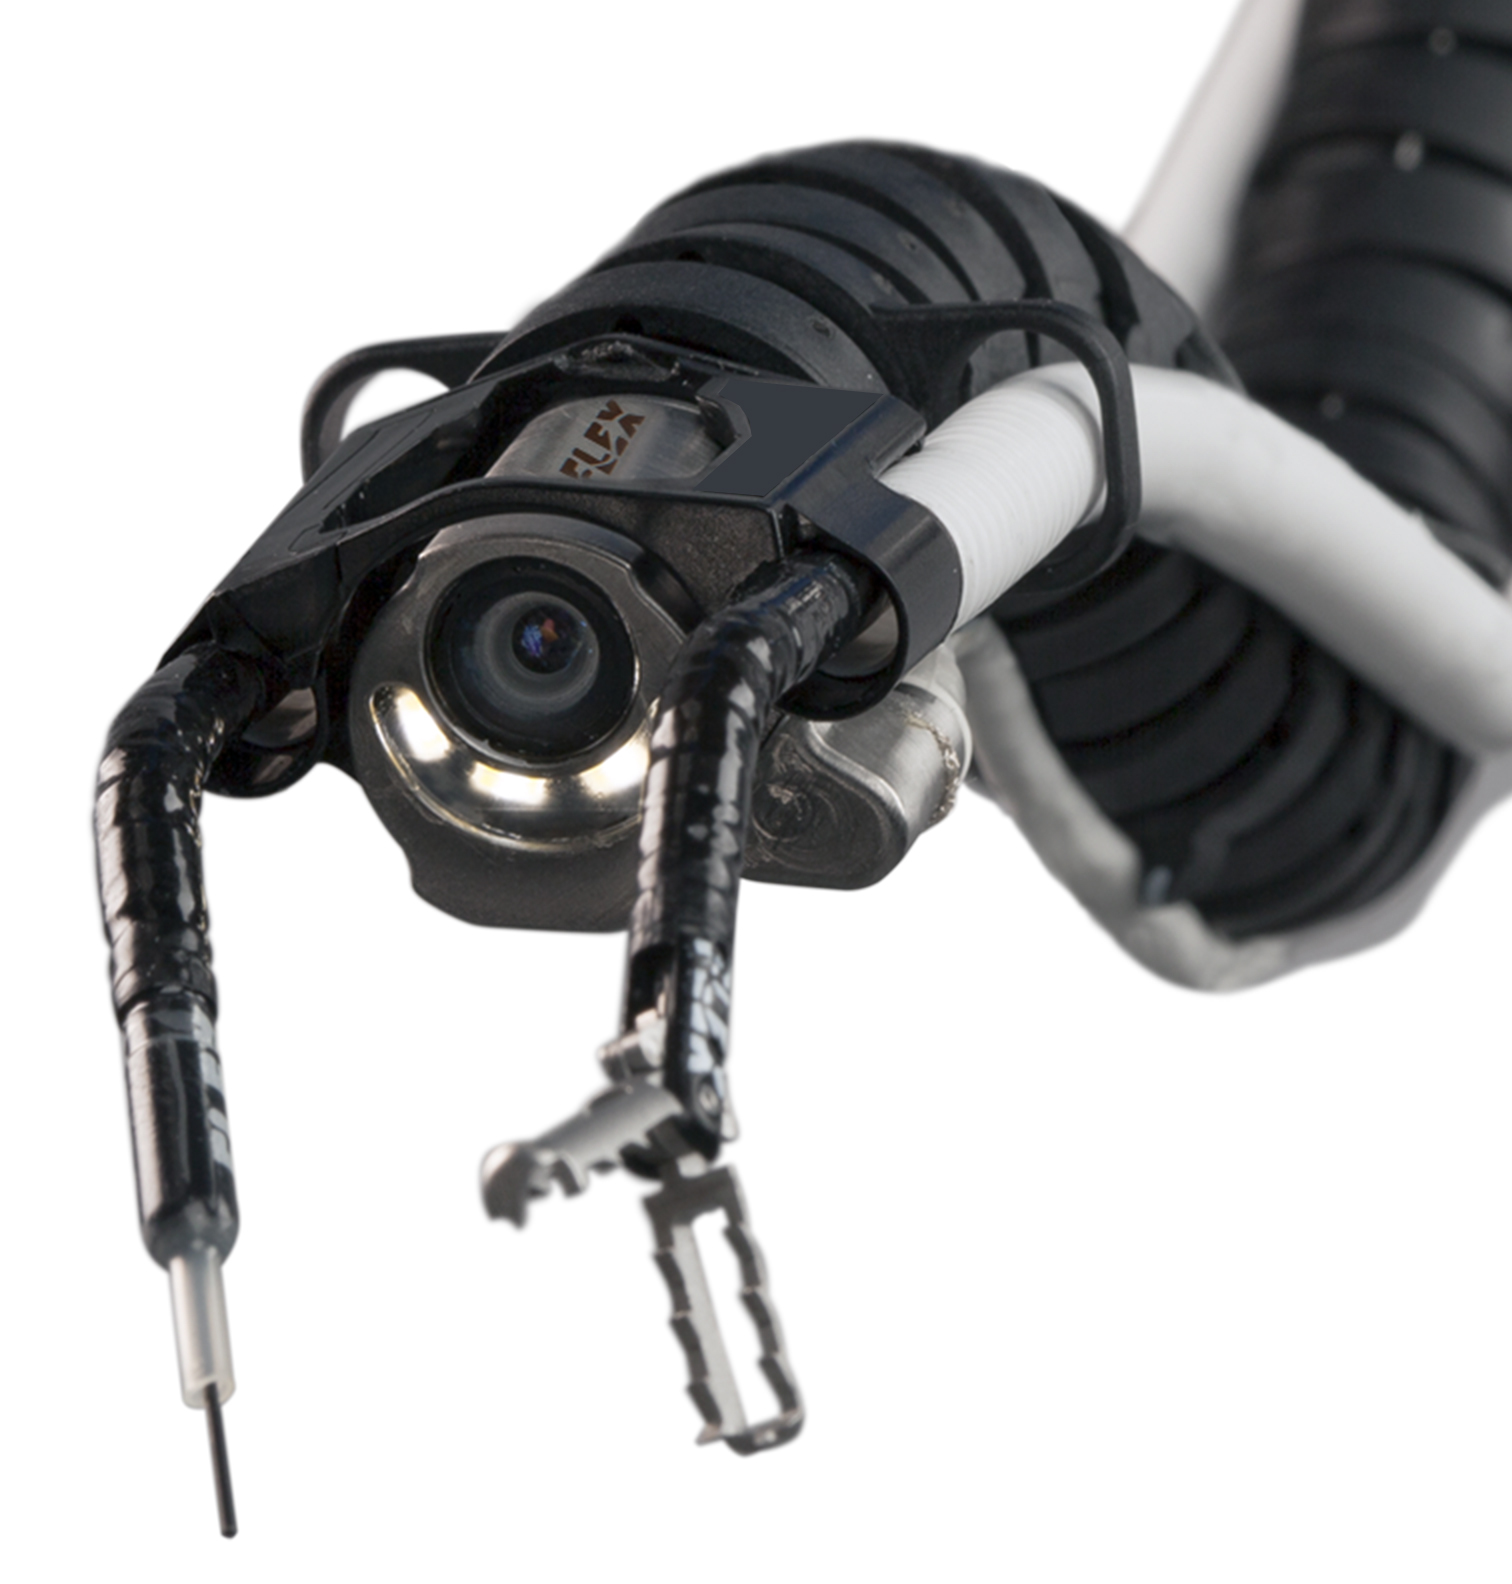 Medrobotics to Build Next Generation Robot System